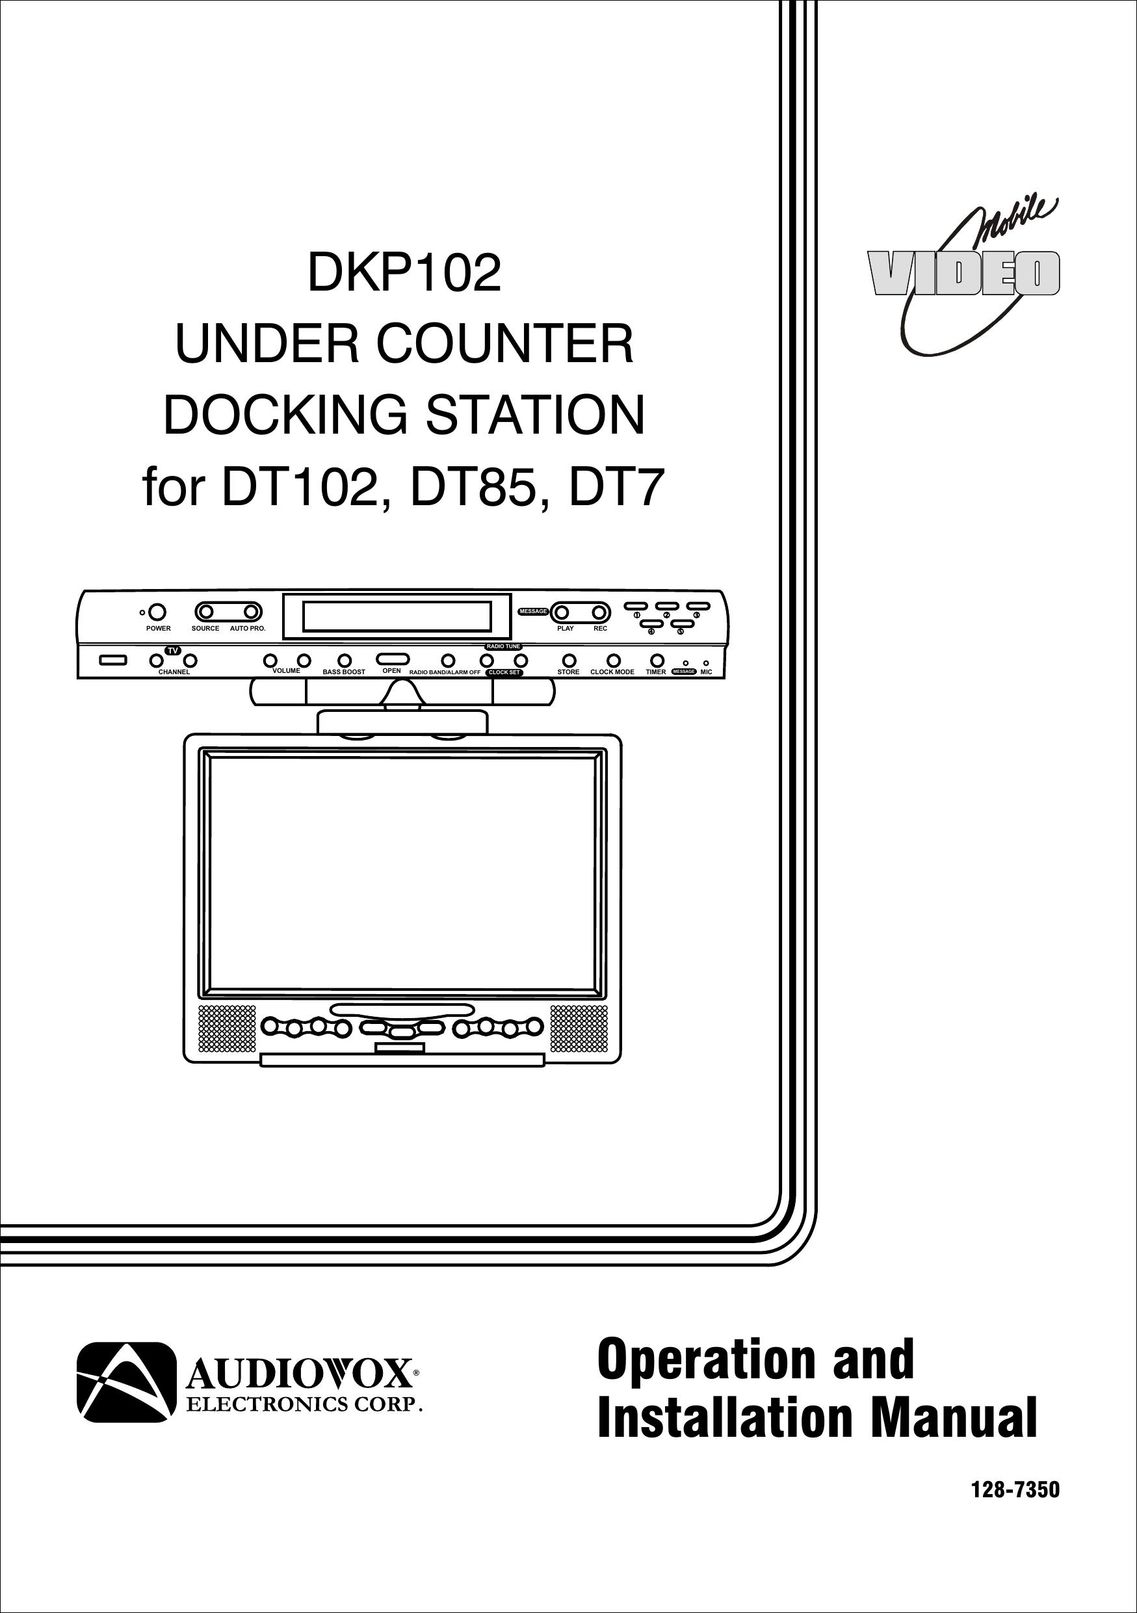 Audiovox DKP102 Kitchen Entertainment Center User Manual